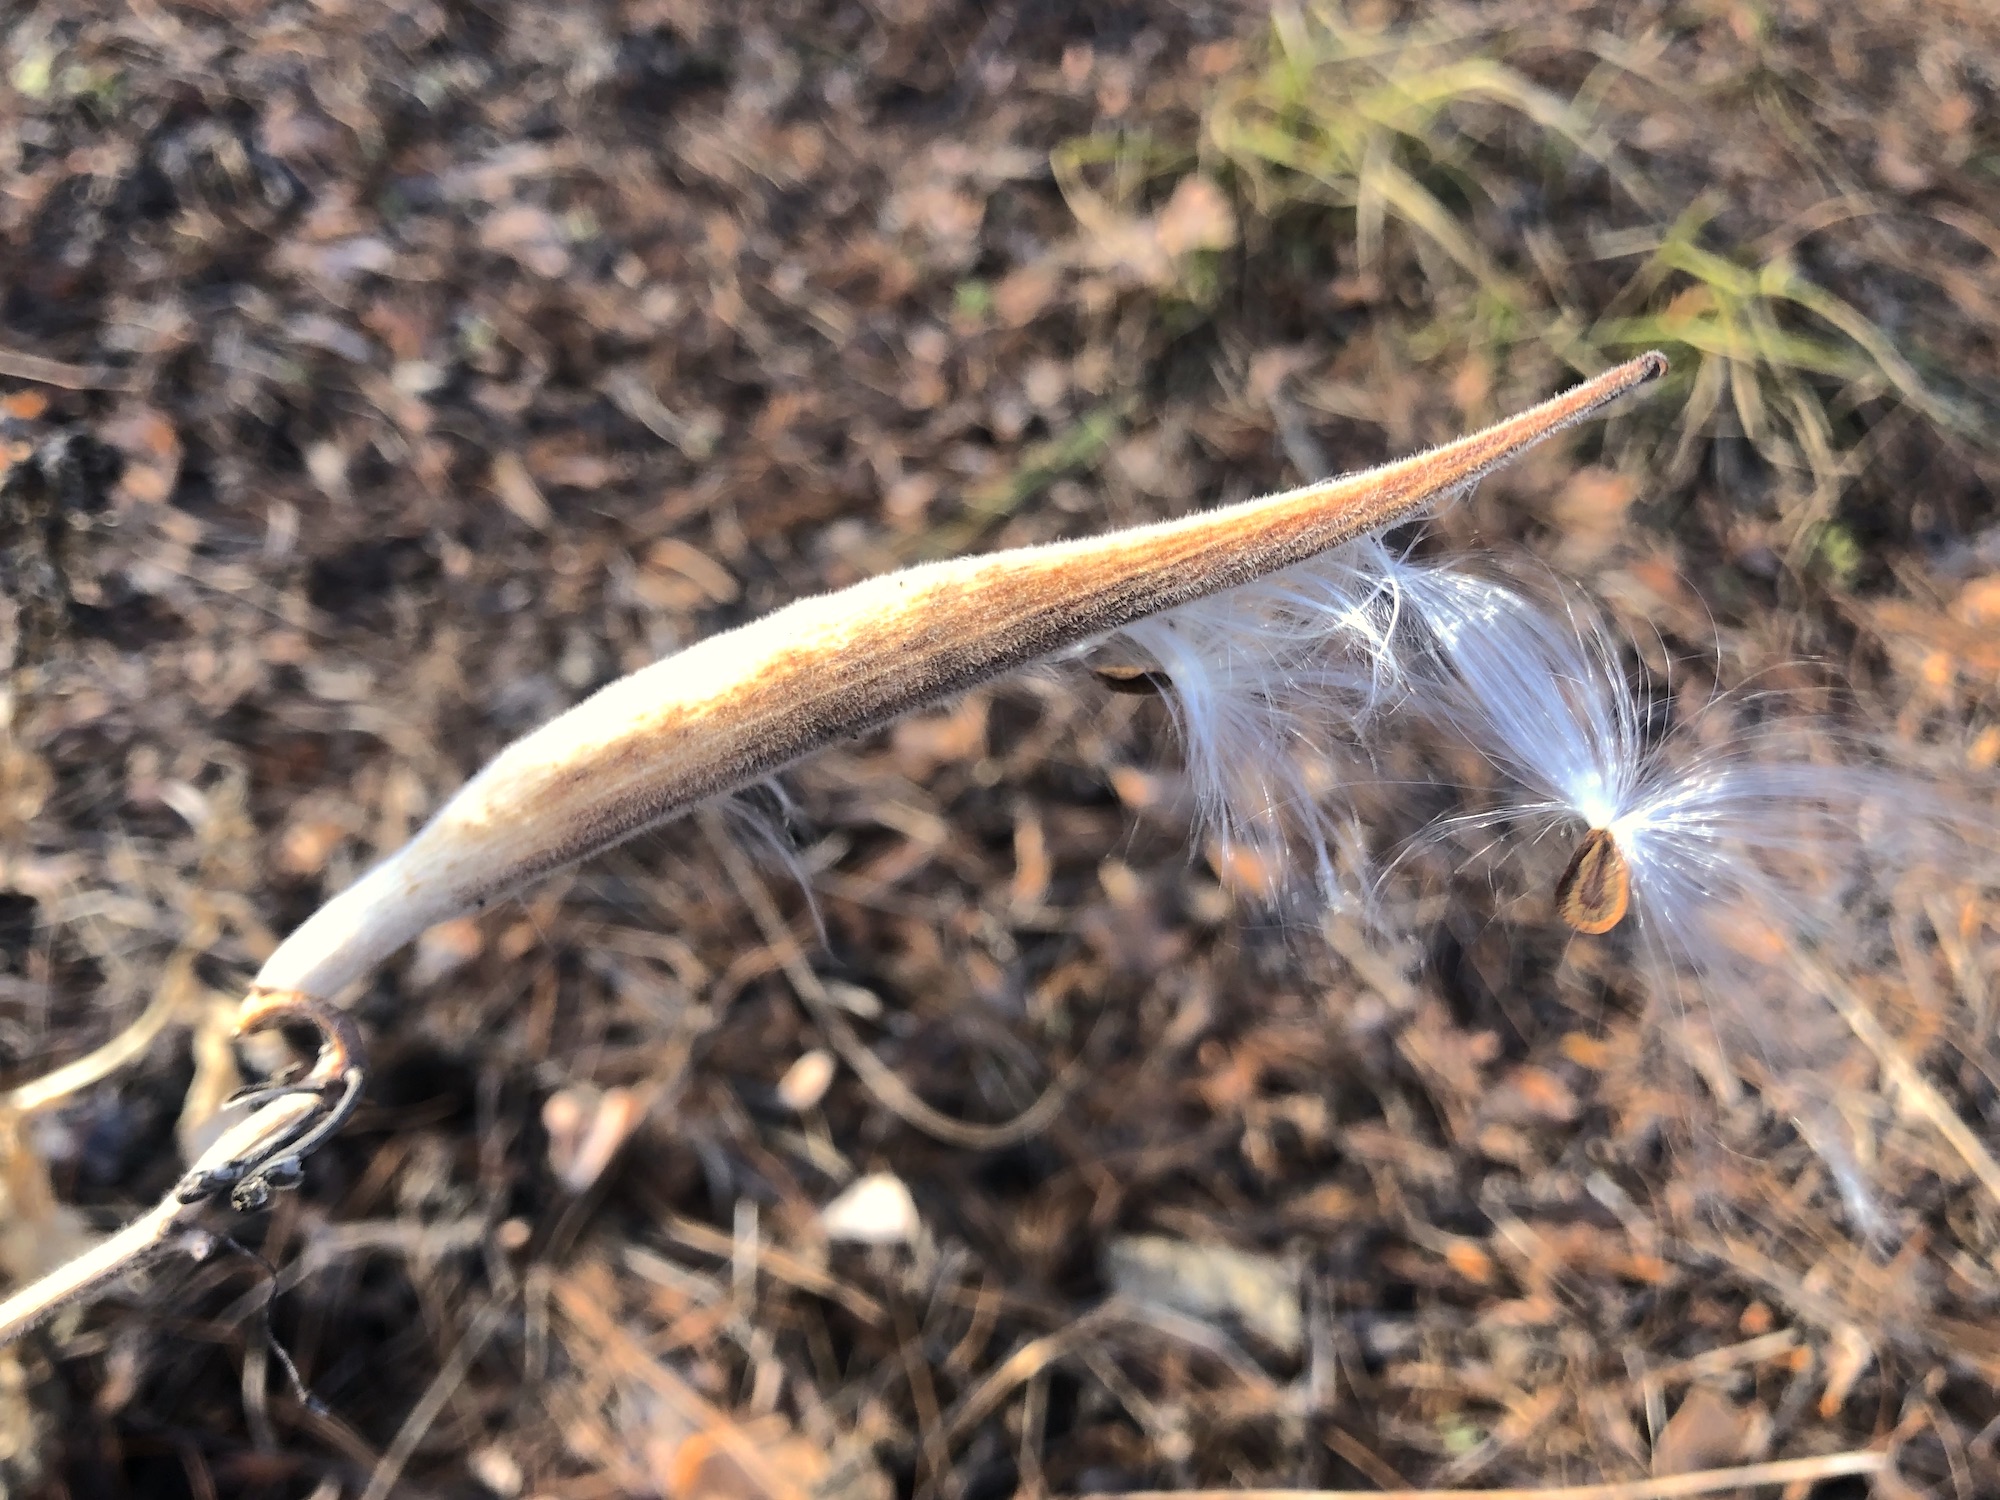 Butterfly Milkweed seed pod in Thoreau Rain Garden on December 12, 2021.